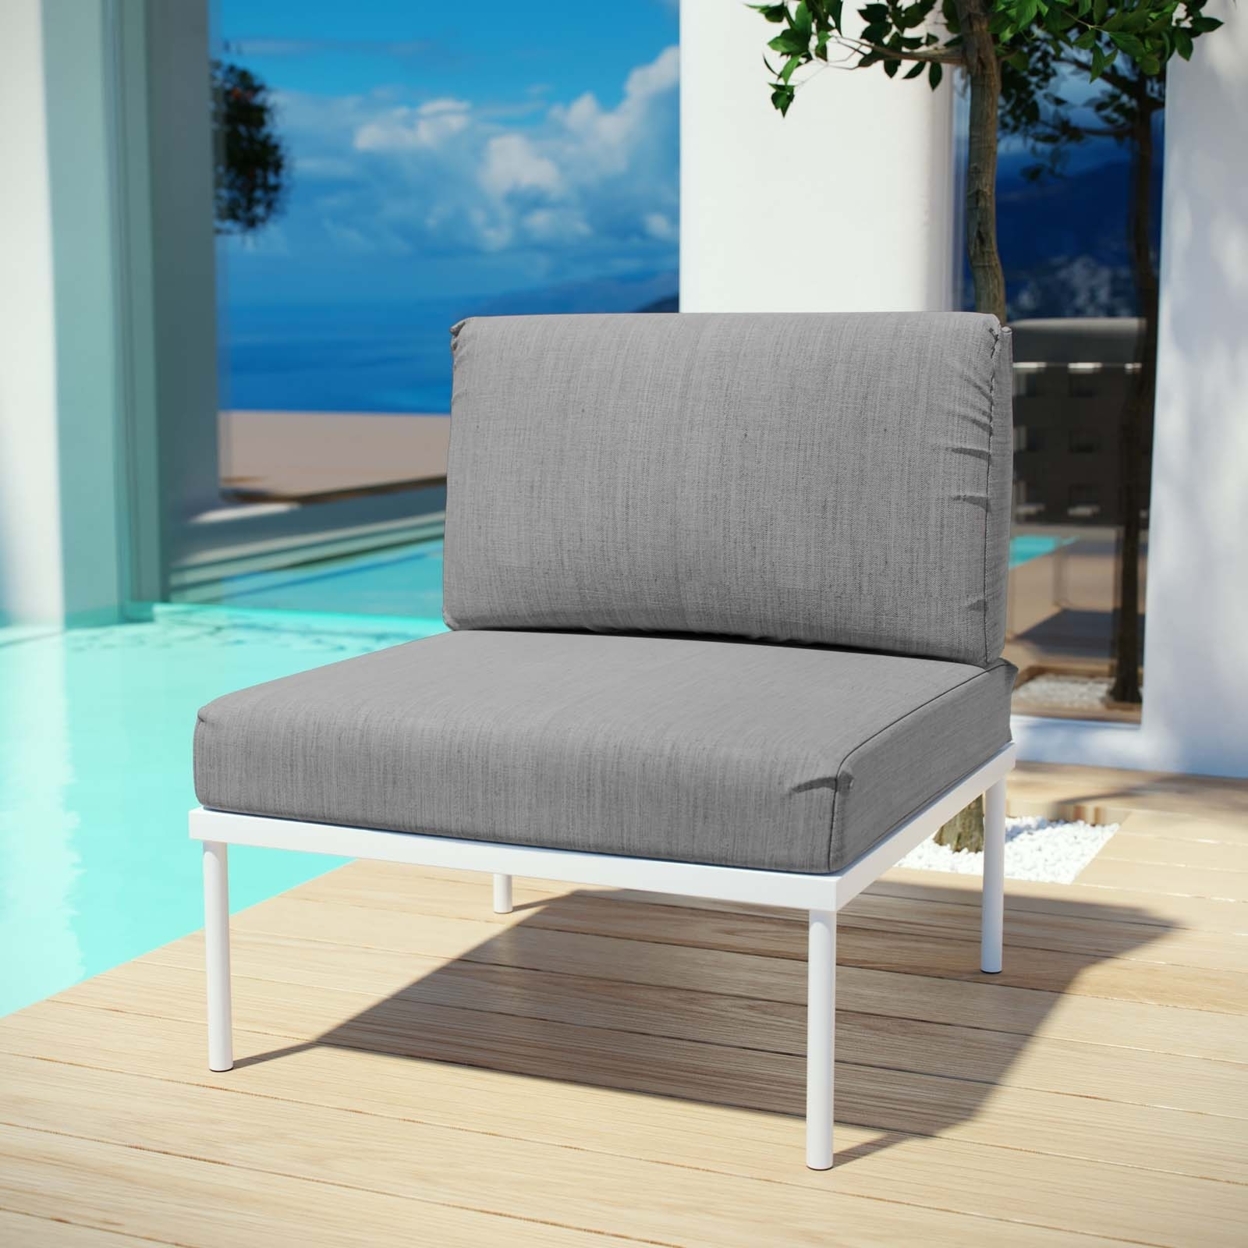 Harmony Armless Outdoor Patio Aluminum Chair White Gray - image 5 of 5